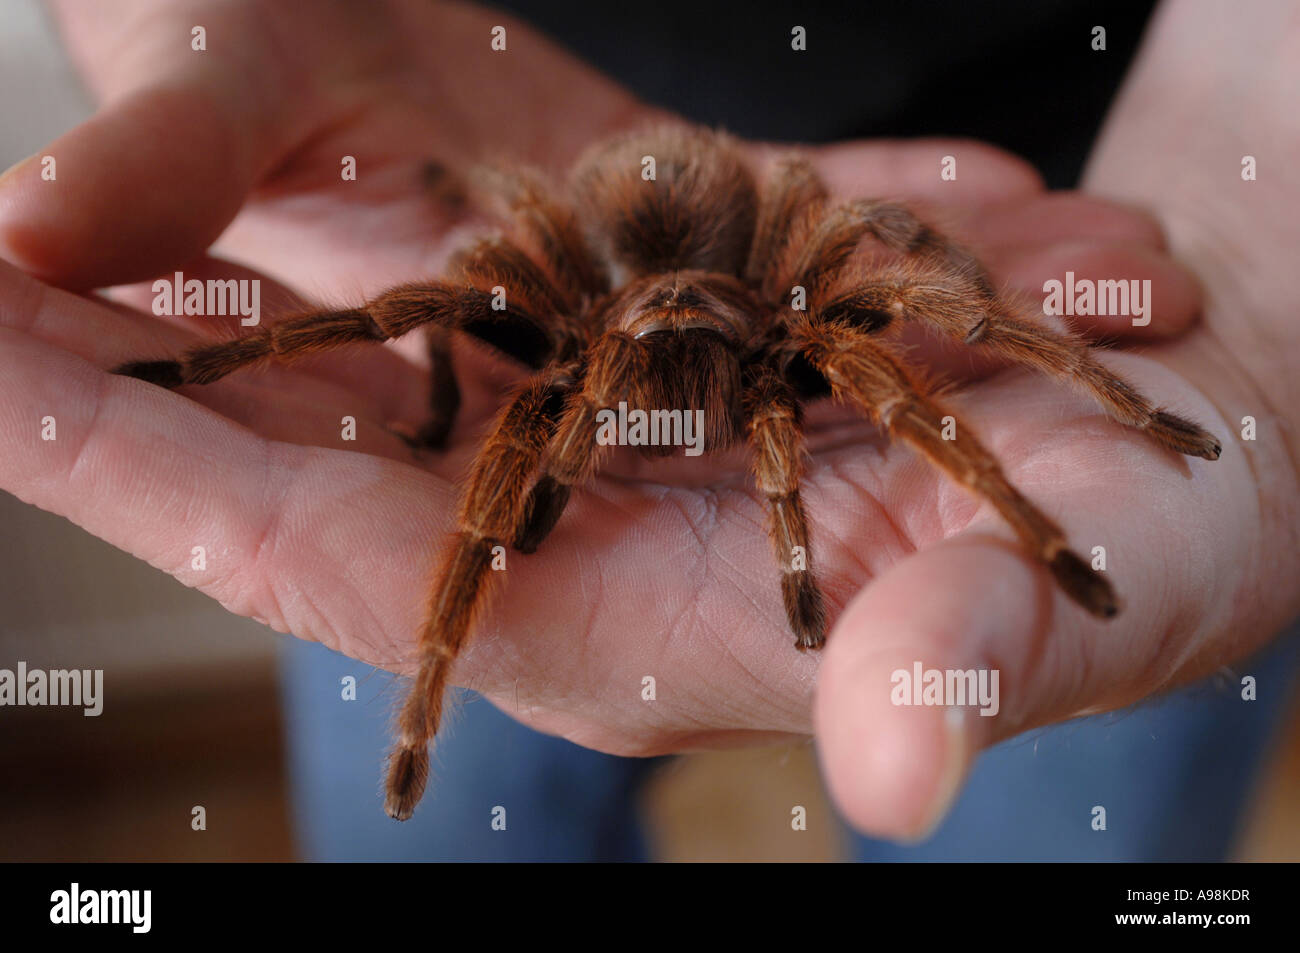 Un mans mano che tiene una grande tarantola spider Foto Stock